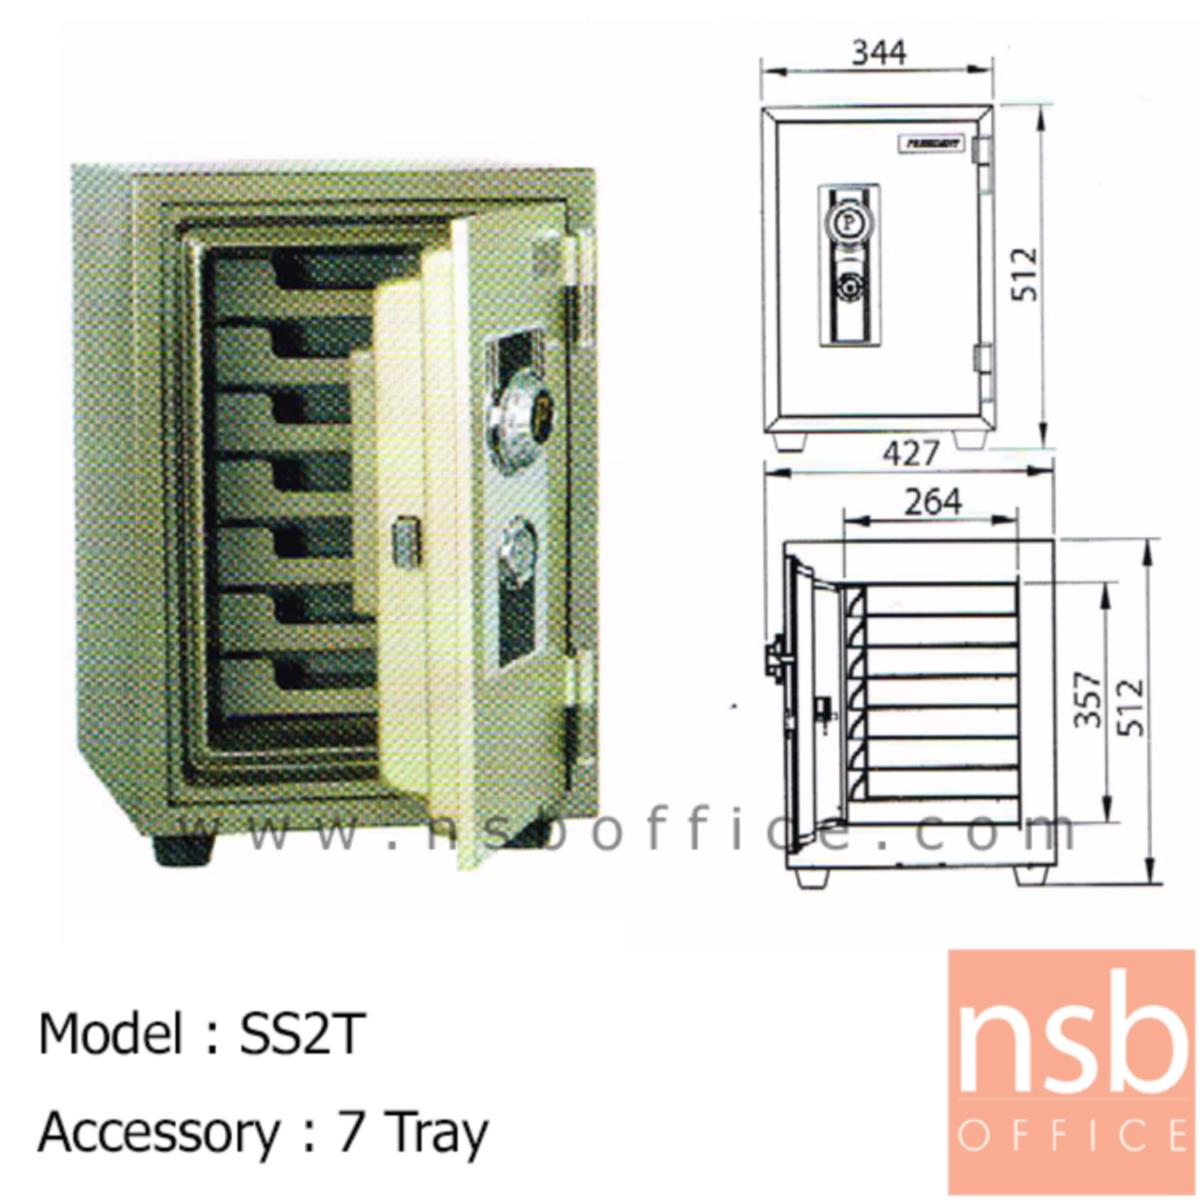 F05A051: ตู้เซฟดิจิตอล 50 กก. มีถาด 7 อัน รุ่น PRESIDENT-SS2TD มี 1 กุญแจ 1 รหัส (รหัสใช้กดหน้าตู้)